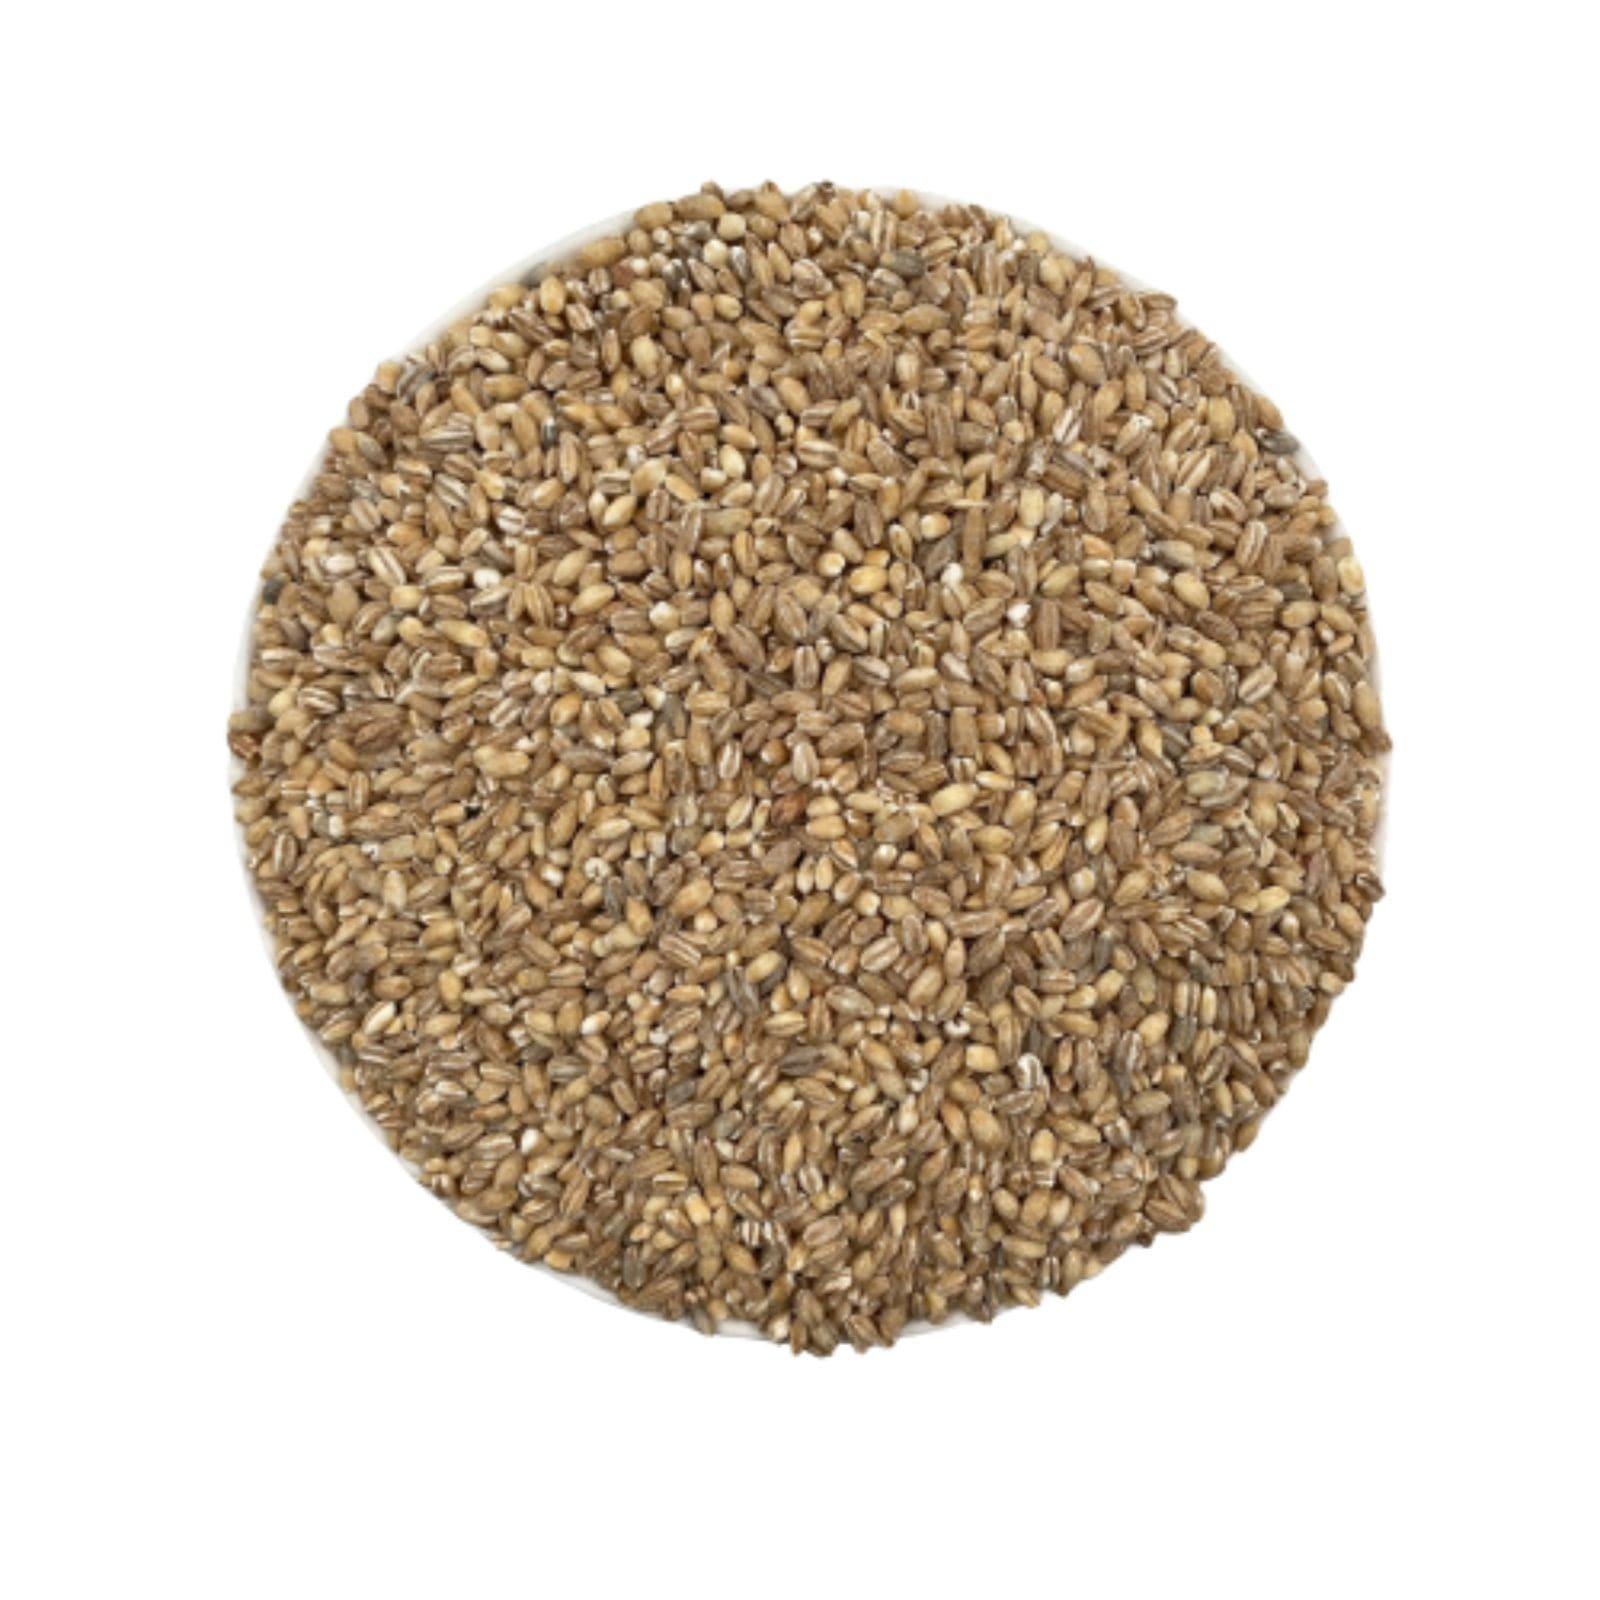 Seminte de orz decorticat 1 kg - DalisPet